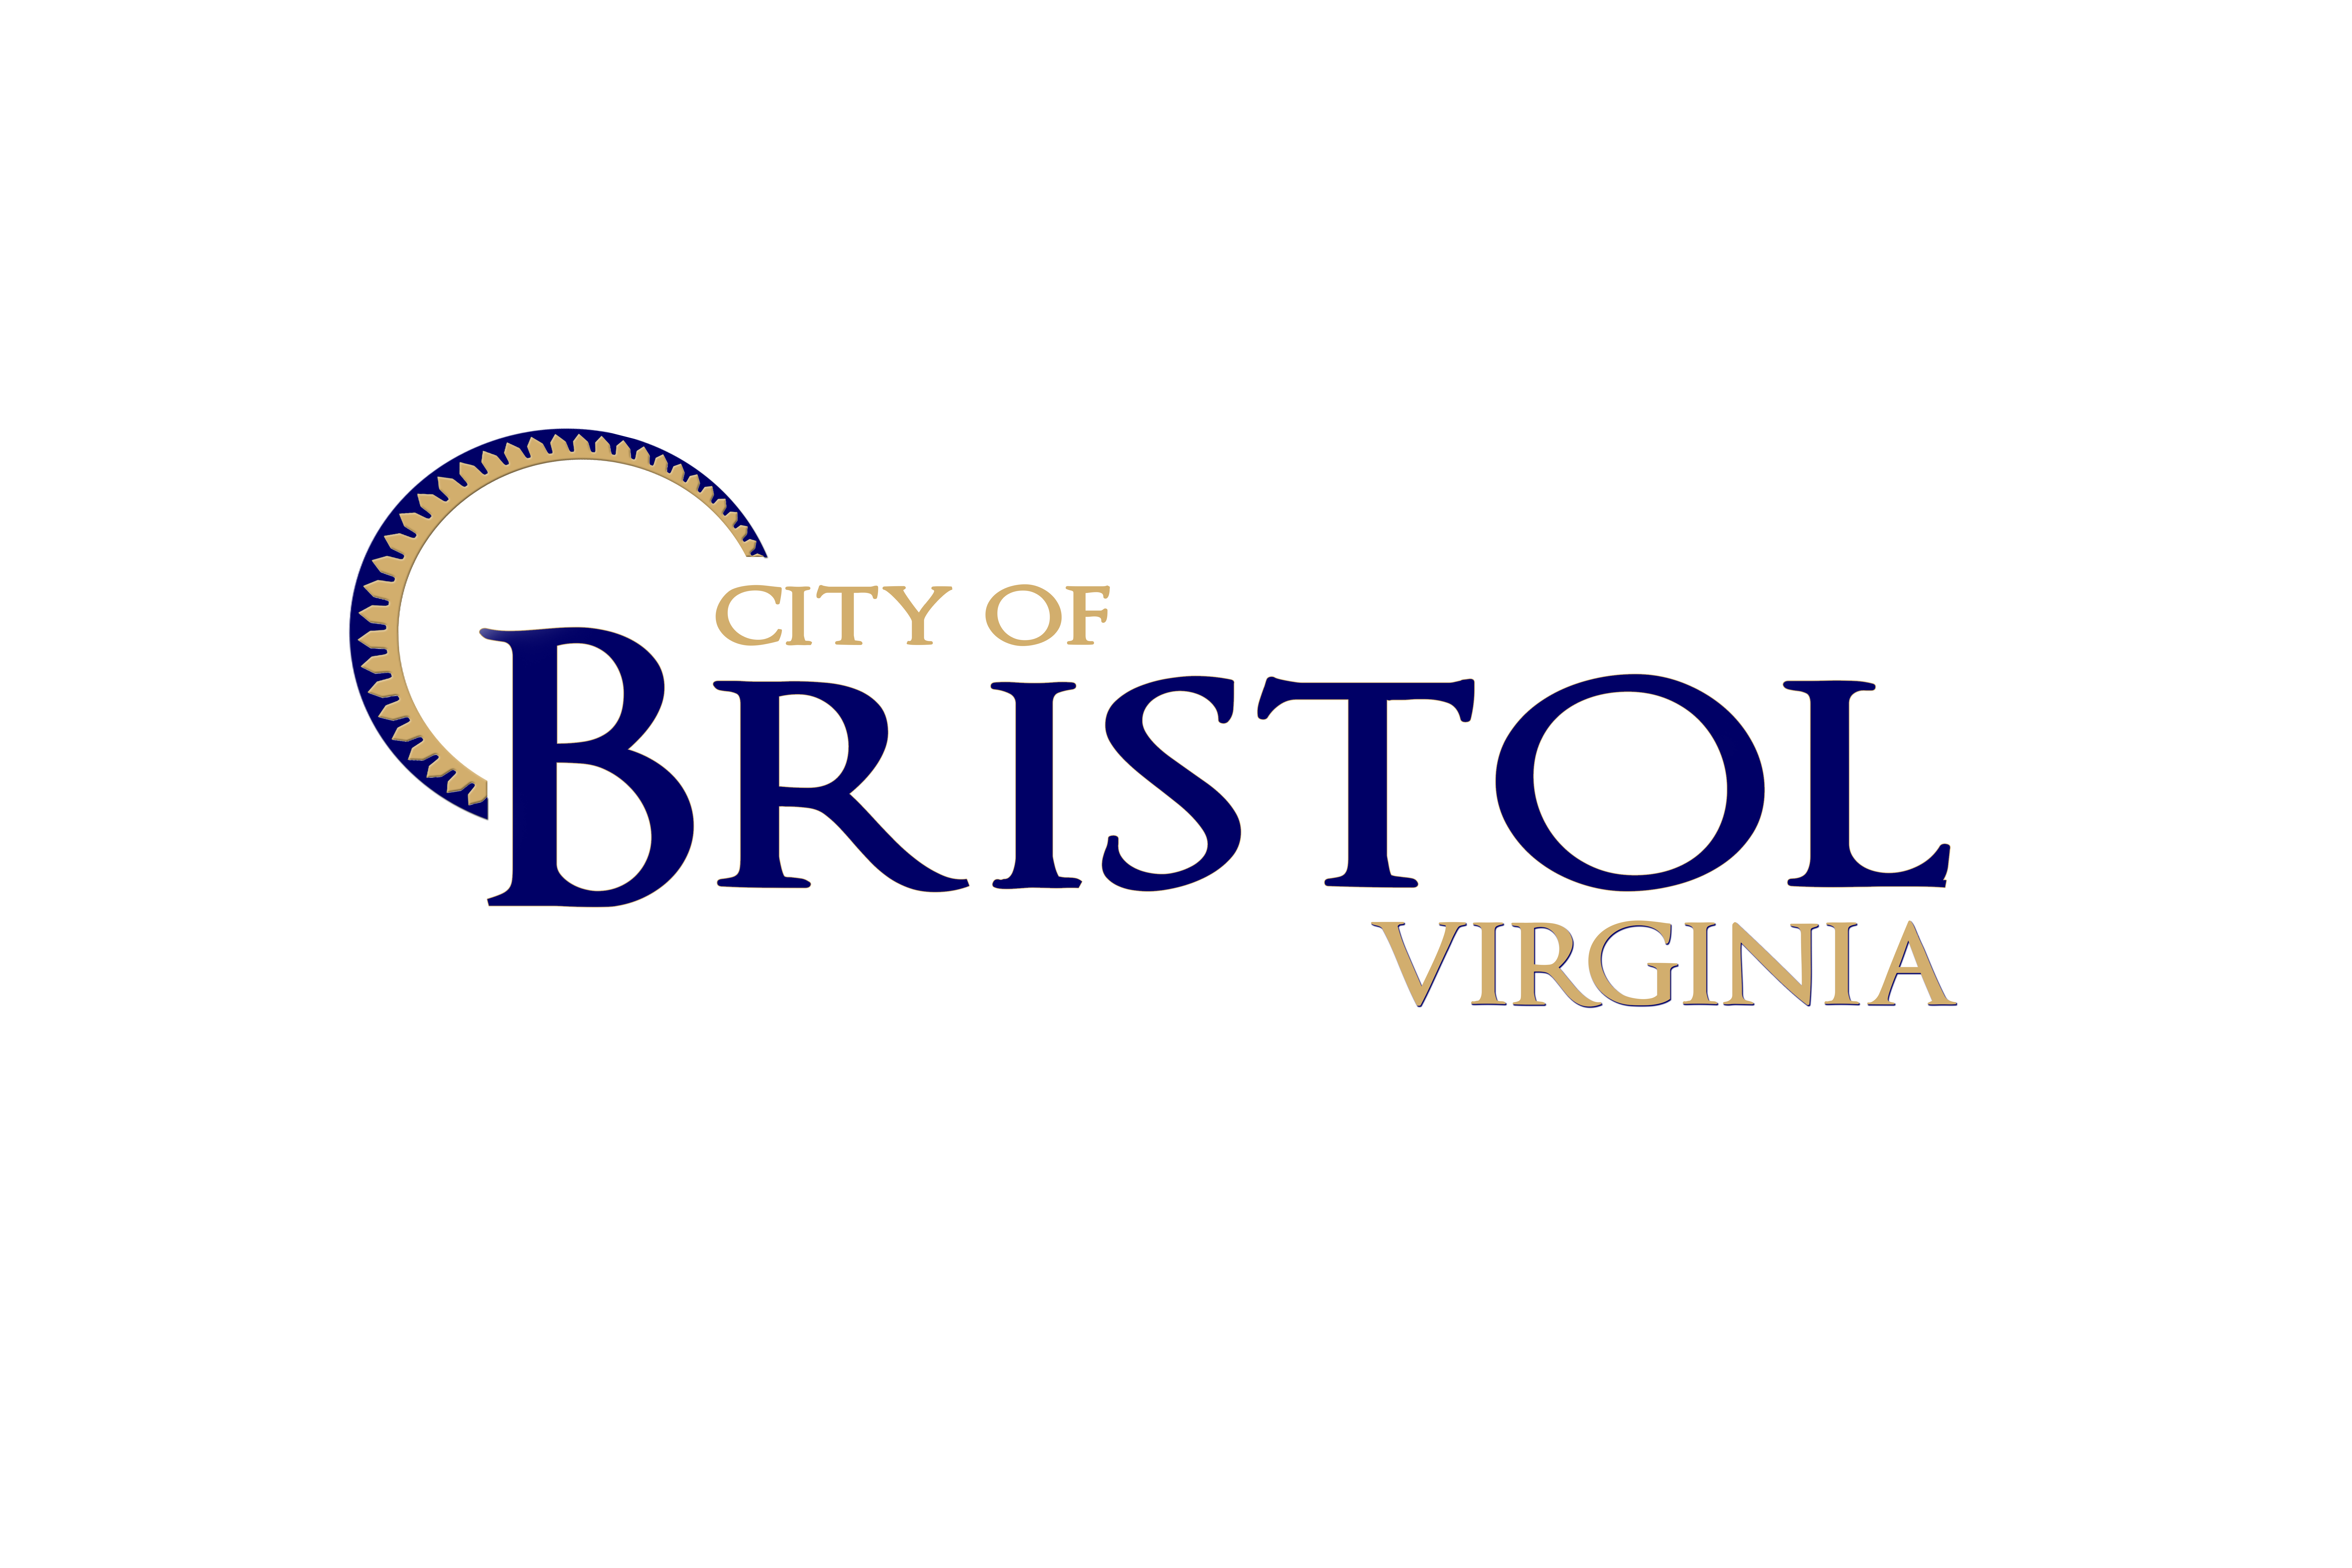 City of Bristol Virginia